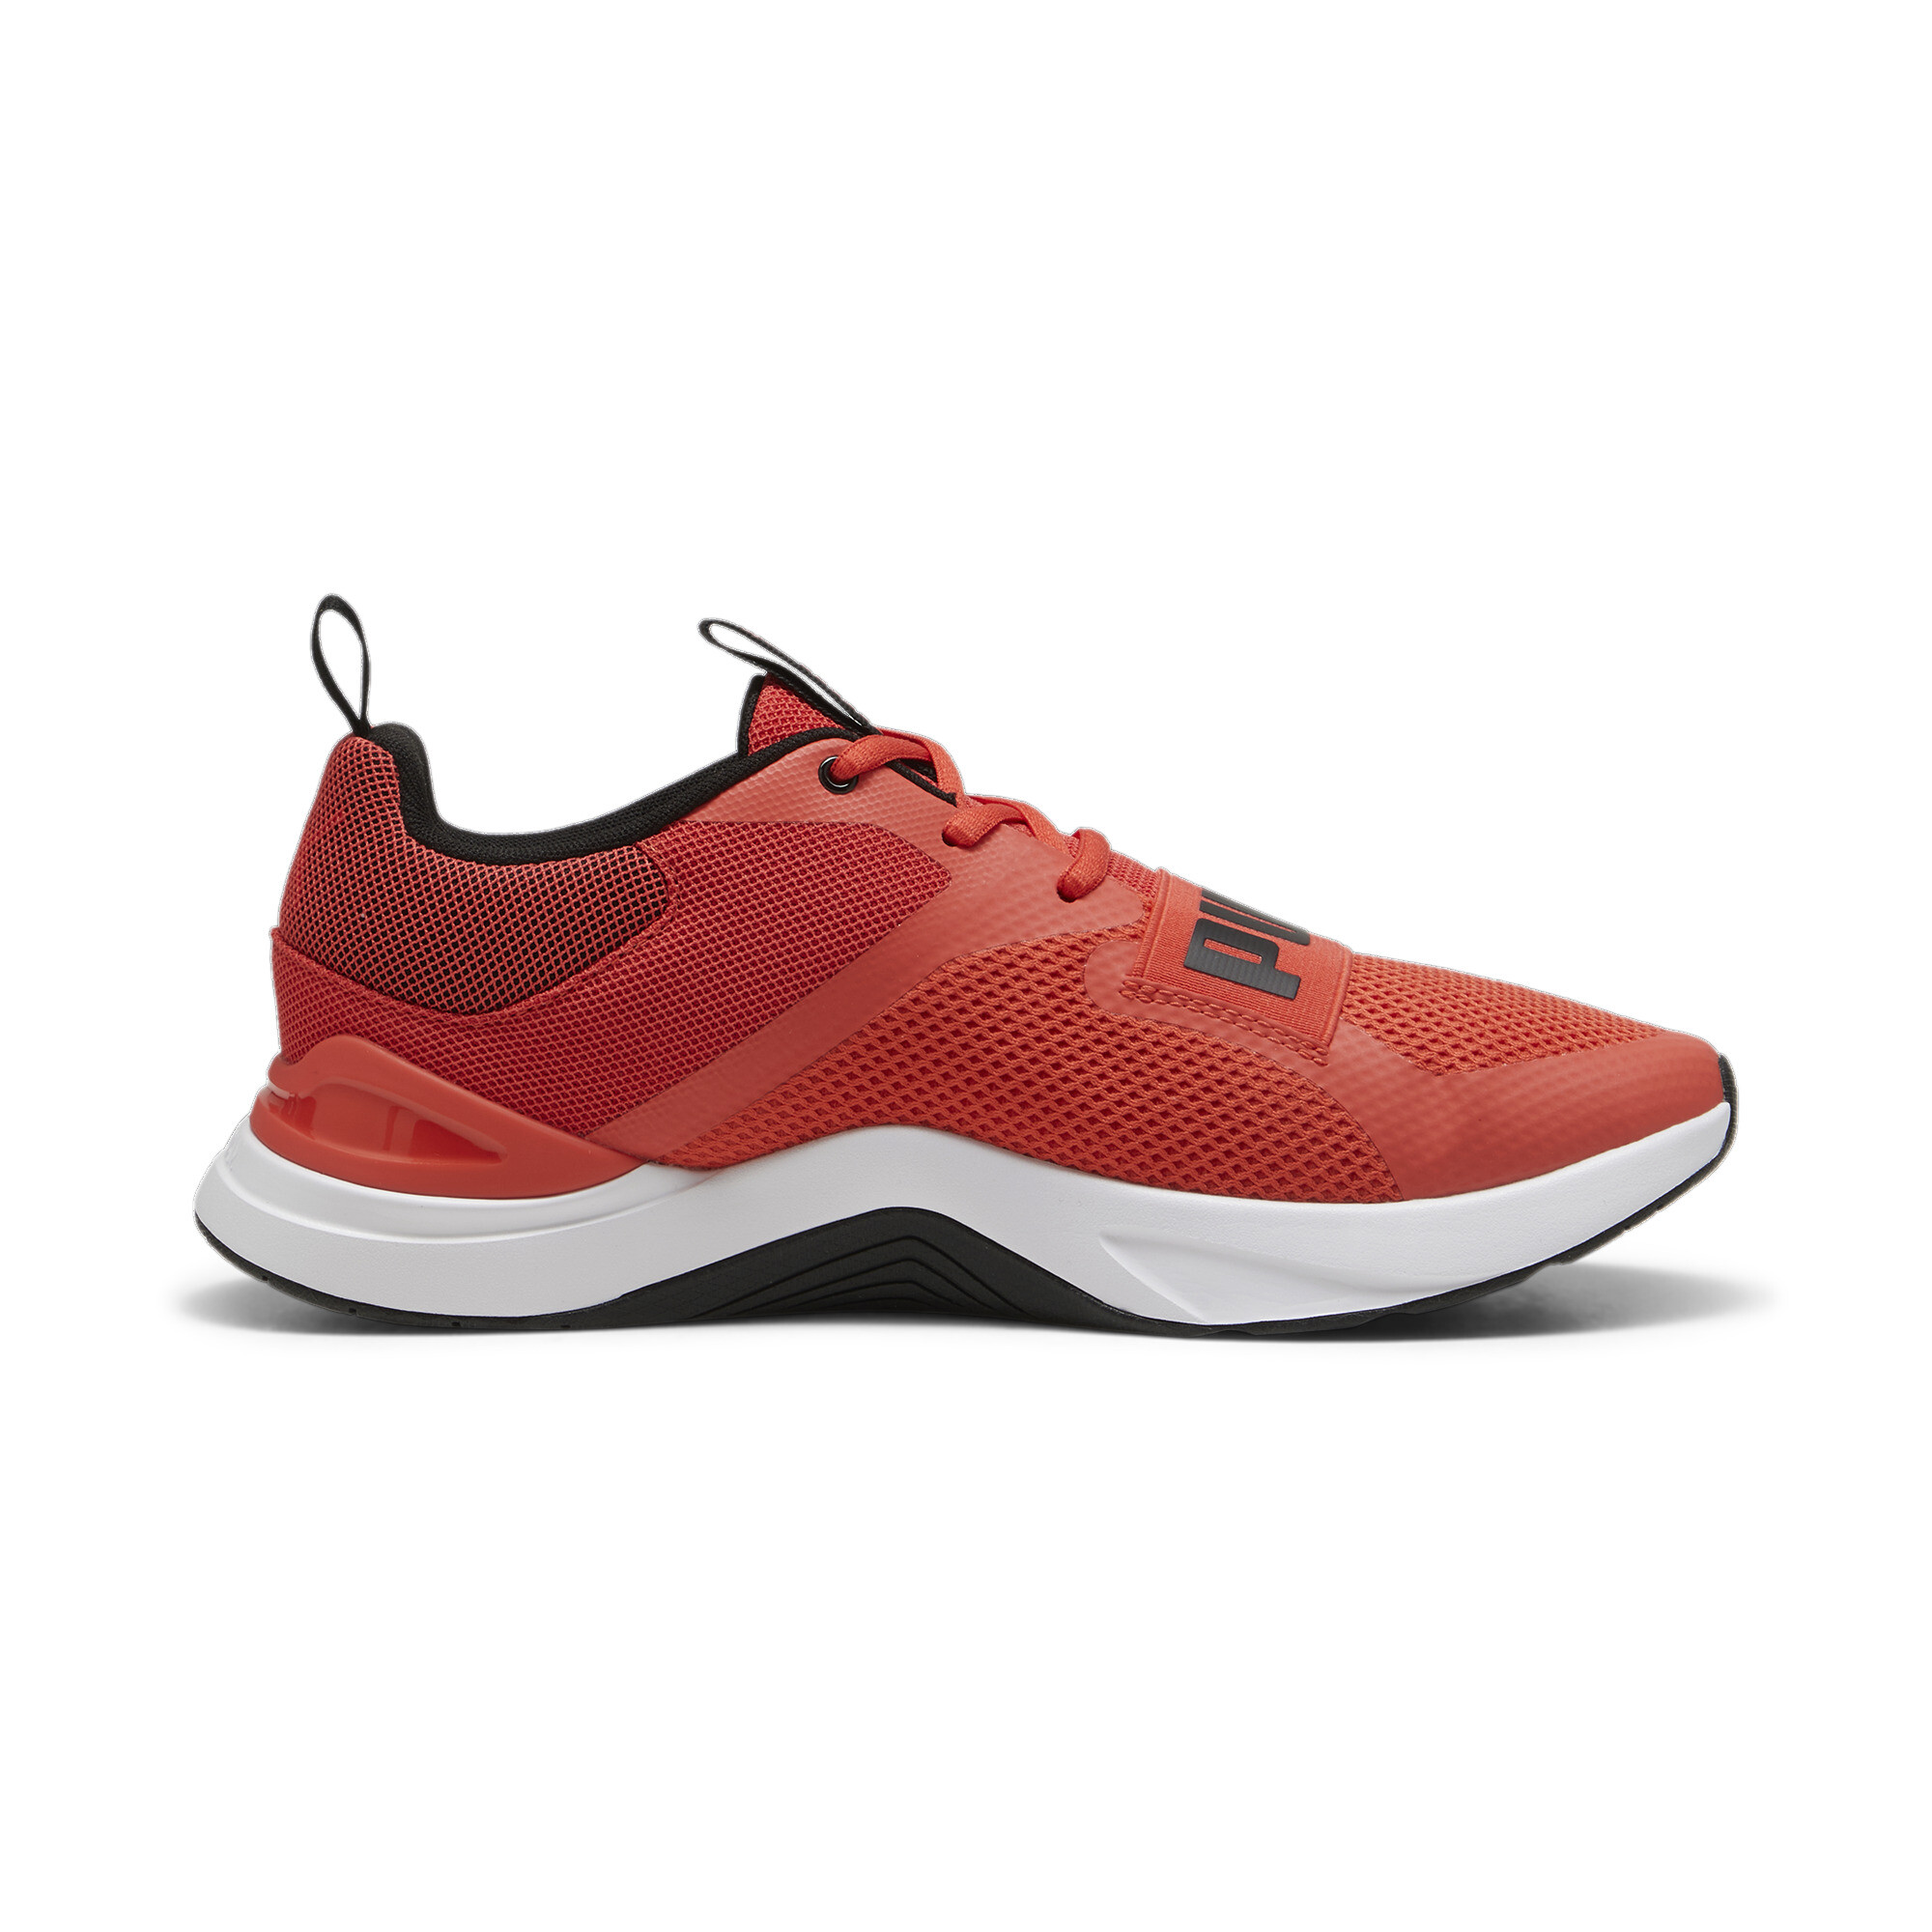 Men's PUMA Prospect Training Shoes In Red, Size EU 44.5